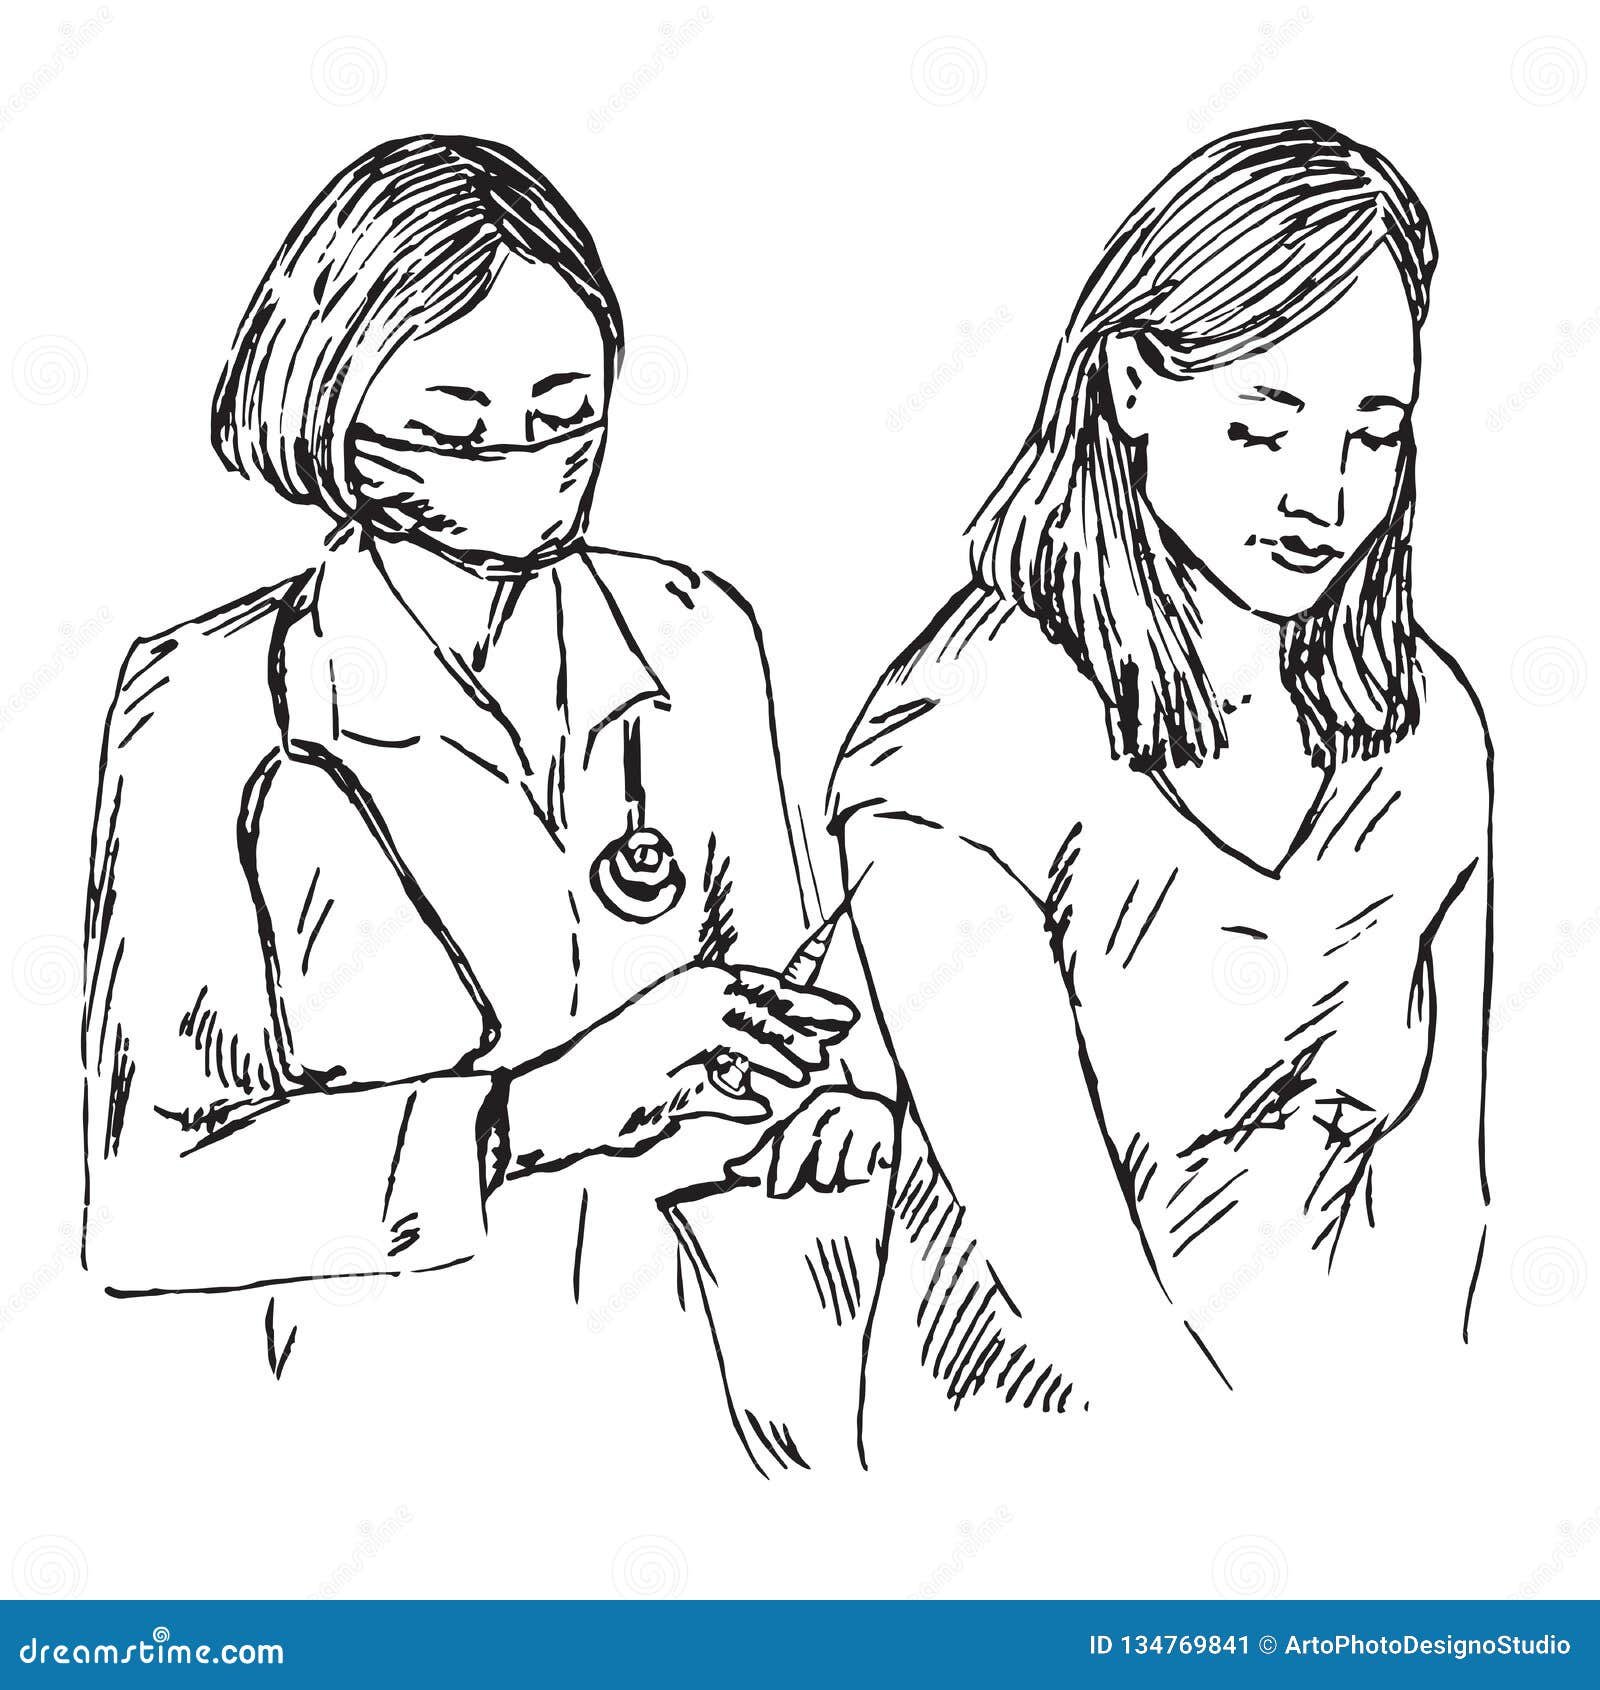 Nurse in medical uniform sketch vector hand drawn illustration motives  of health care medic specialist nursing beauty  CanStock